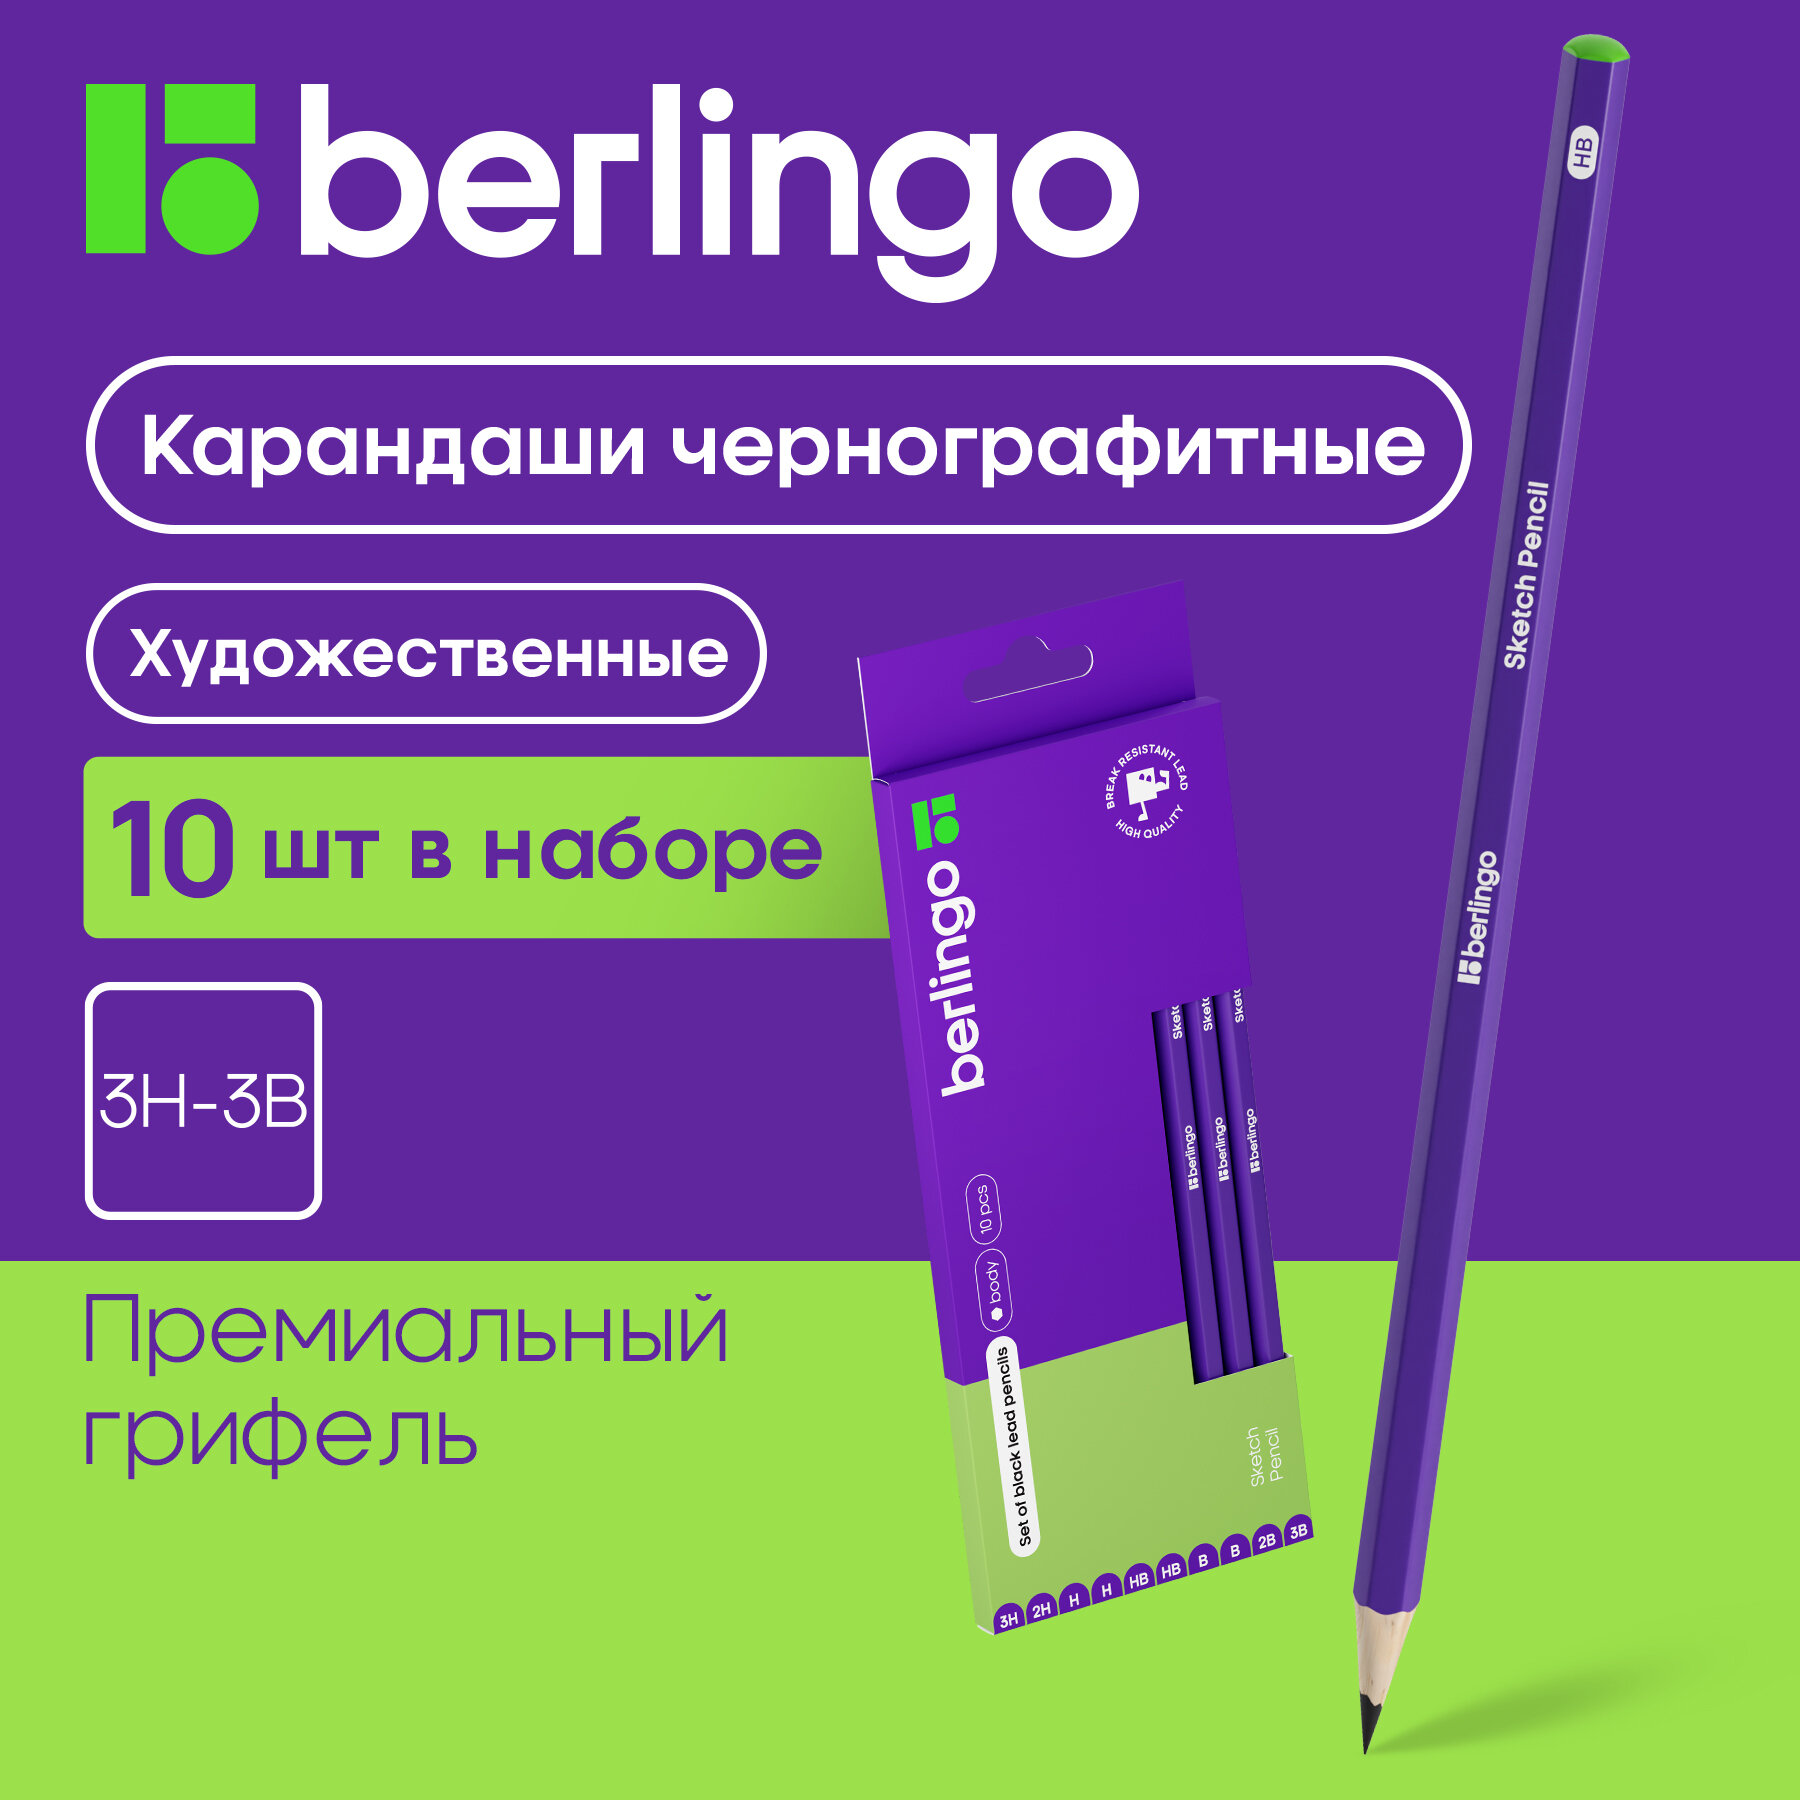 Набор карандашей ч/г Berlingo "Sketch Pencil" 10шт, 3H-3B, заточен, картон. упаковка, европодвес